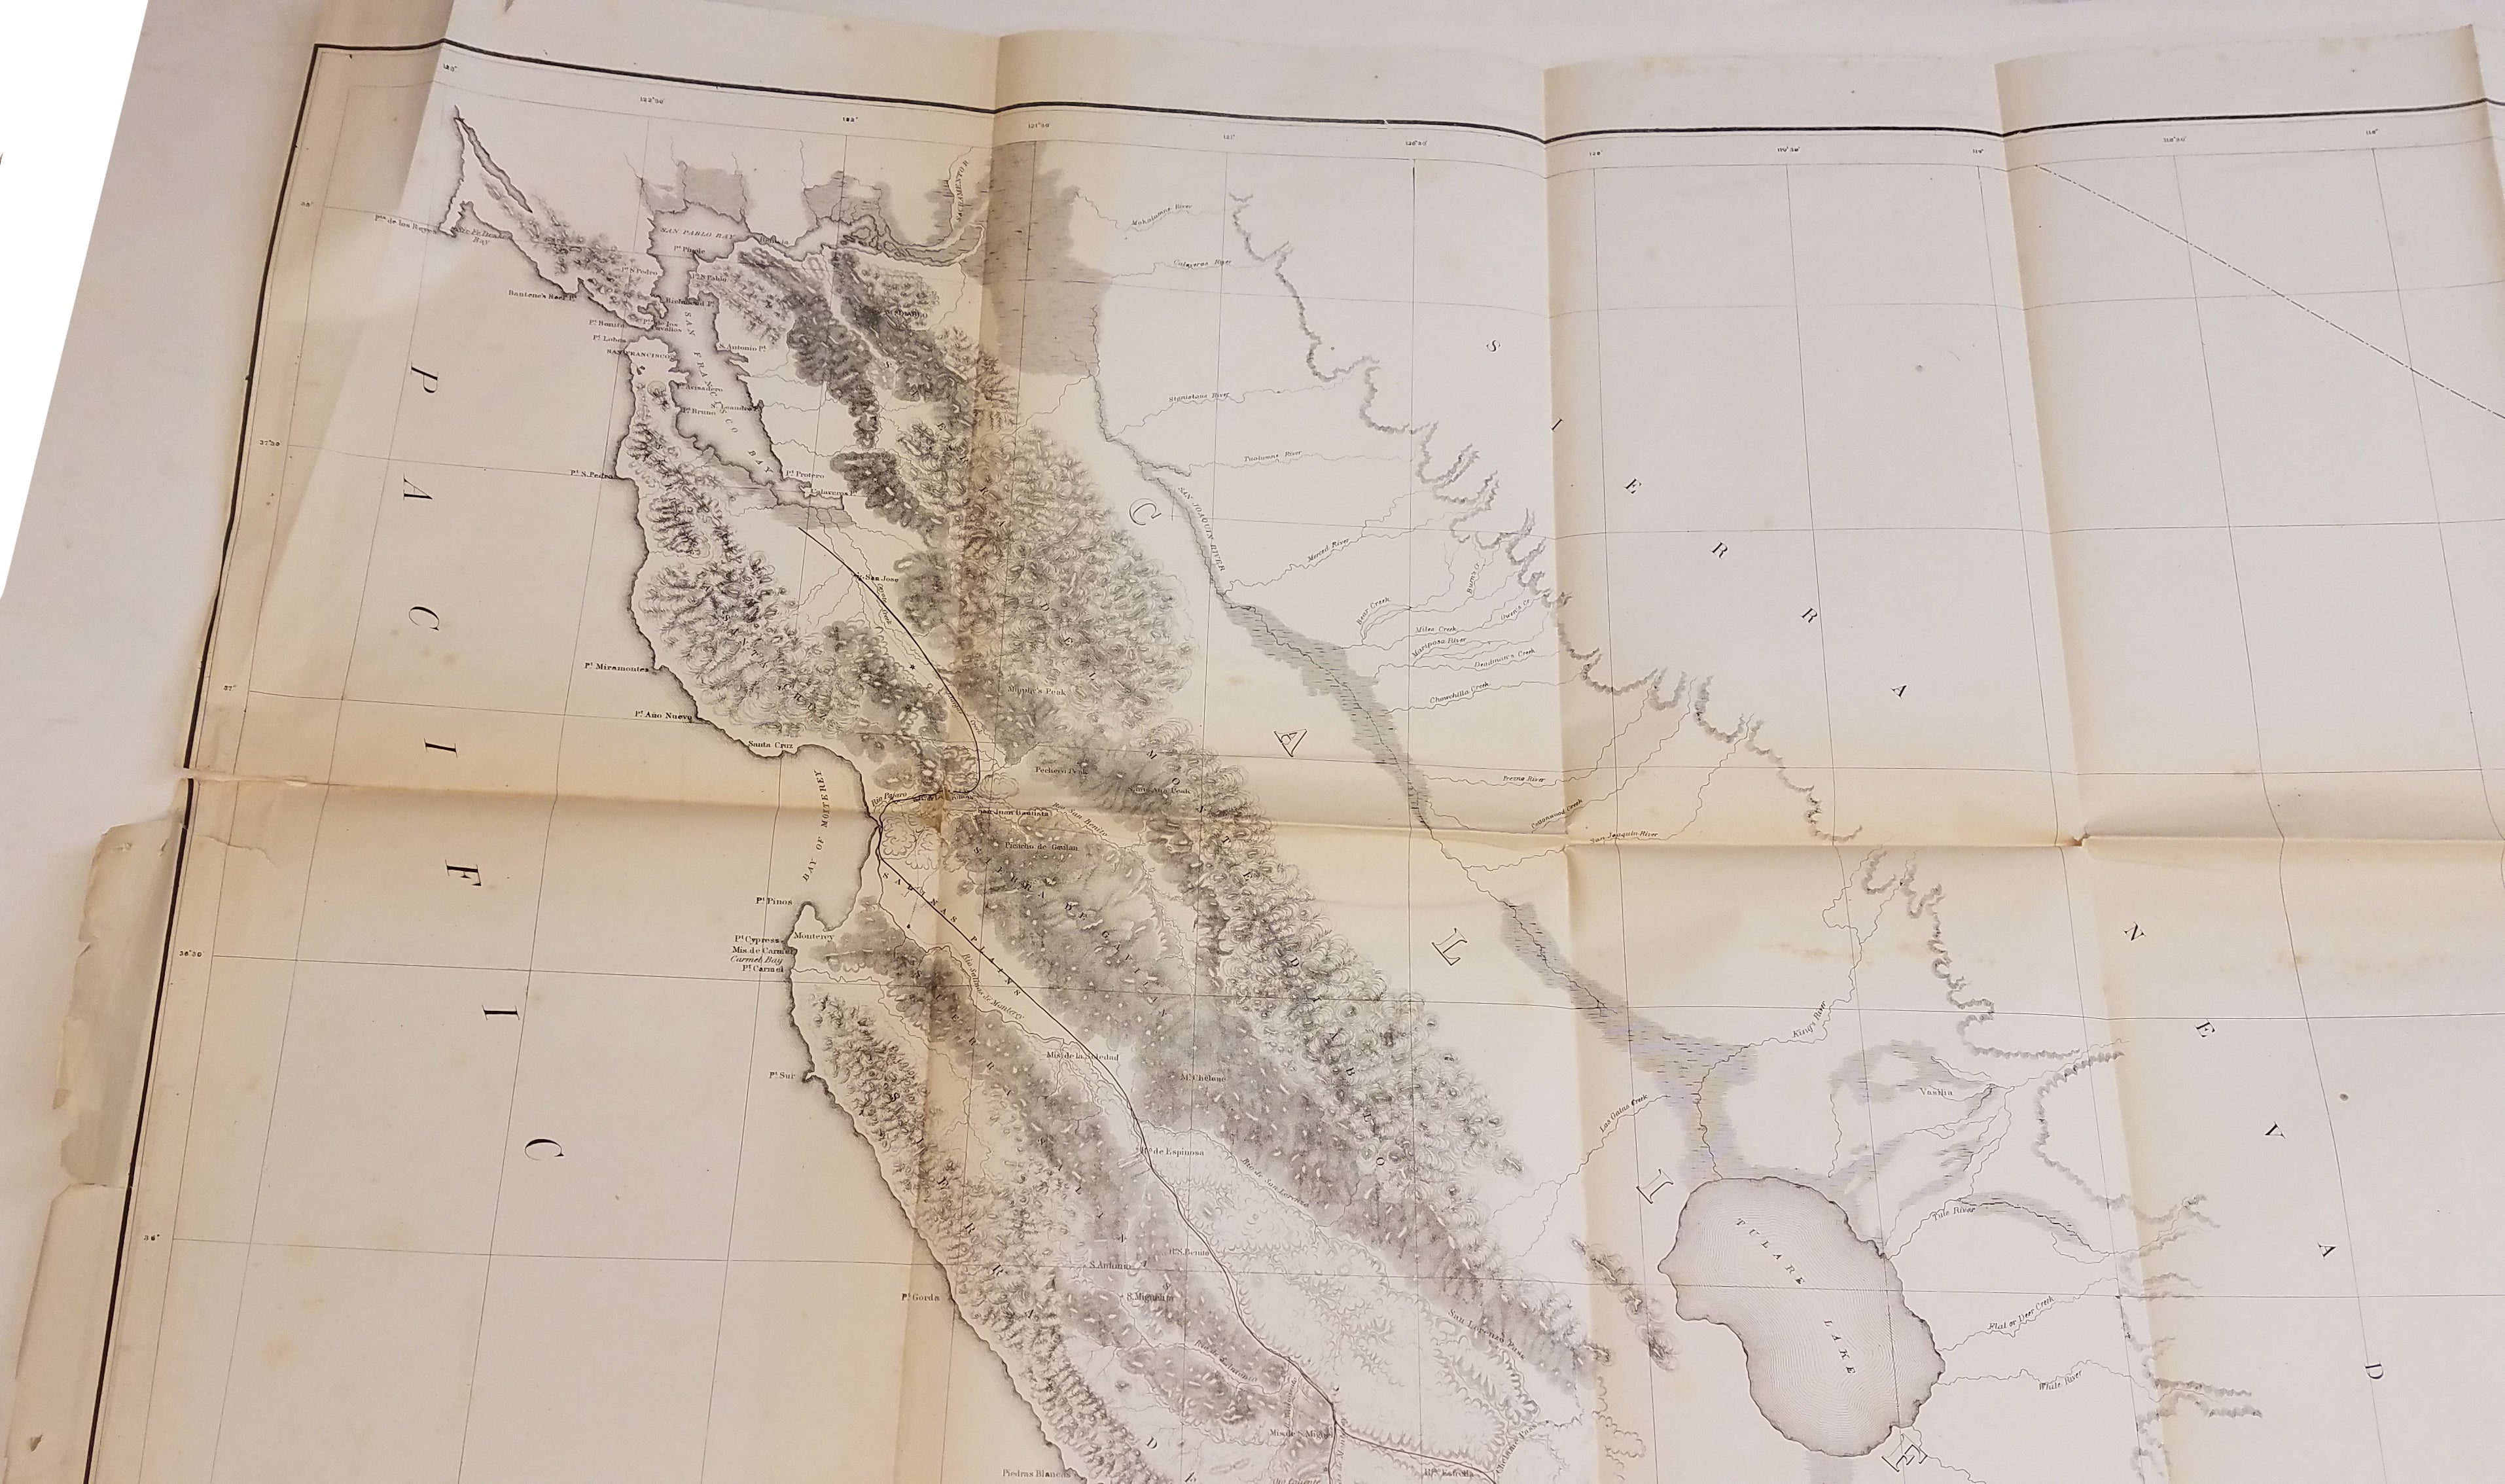 San Francisco Bay to The Plains of Los Angeles (California) 1854-55